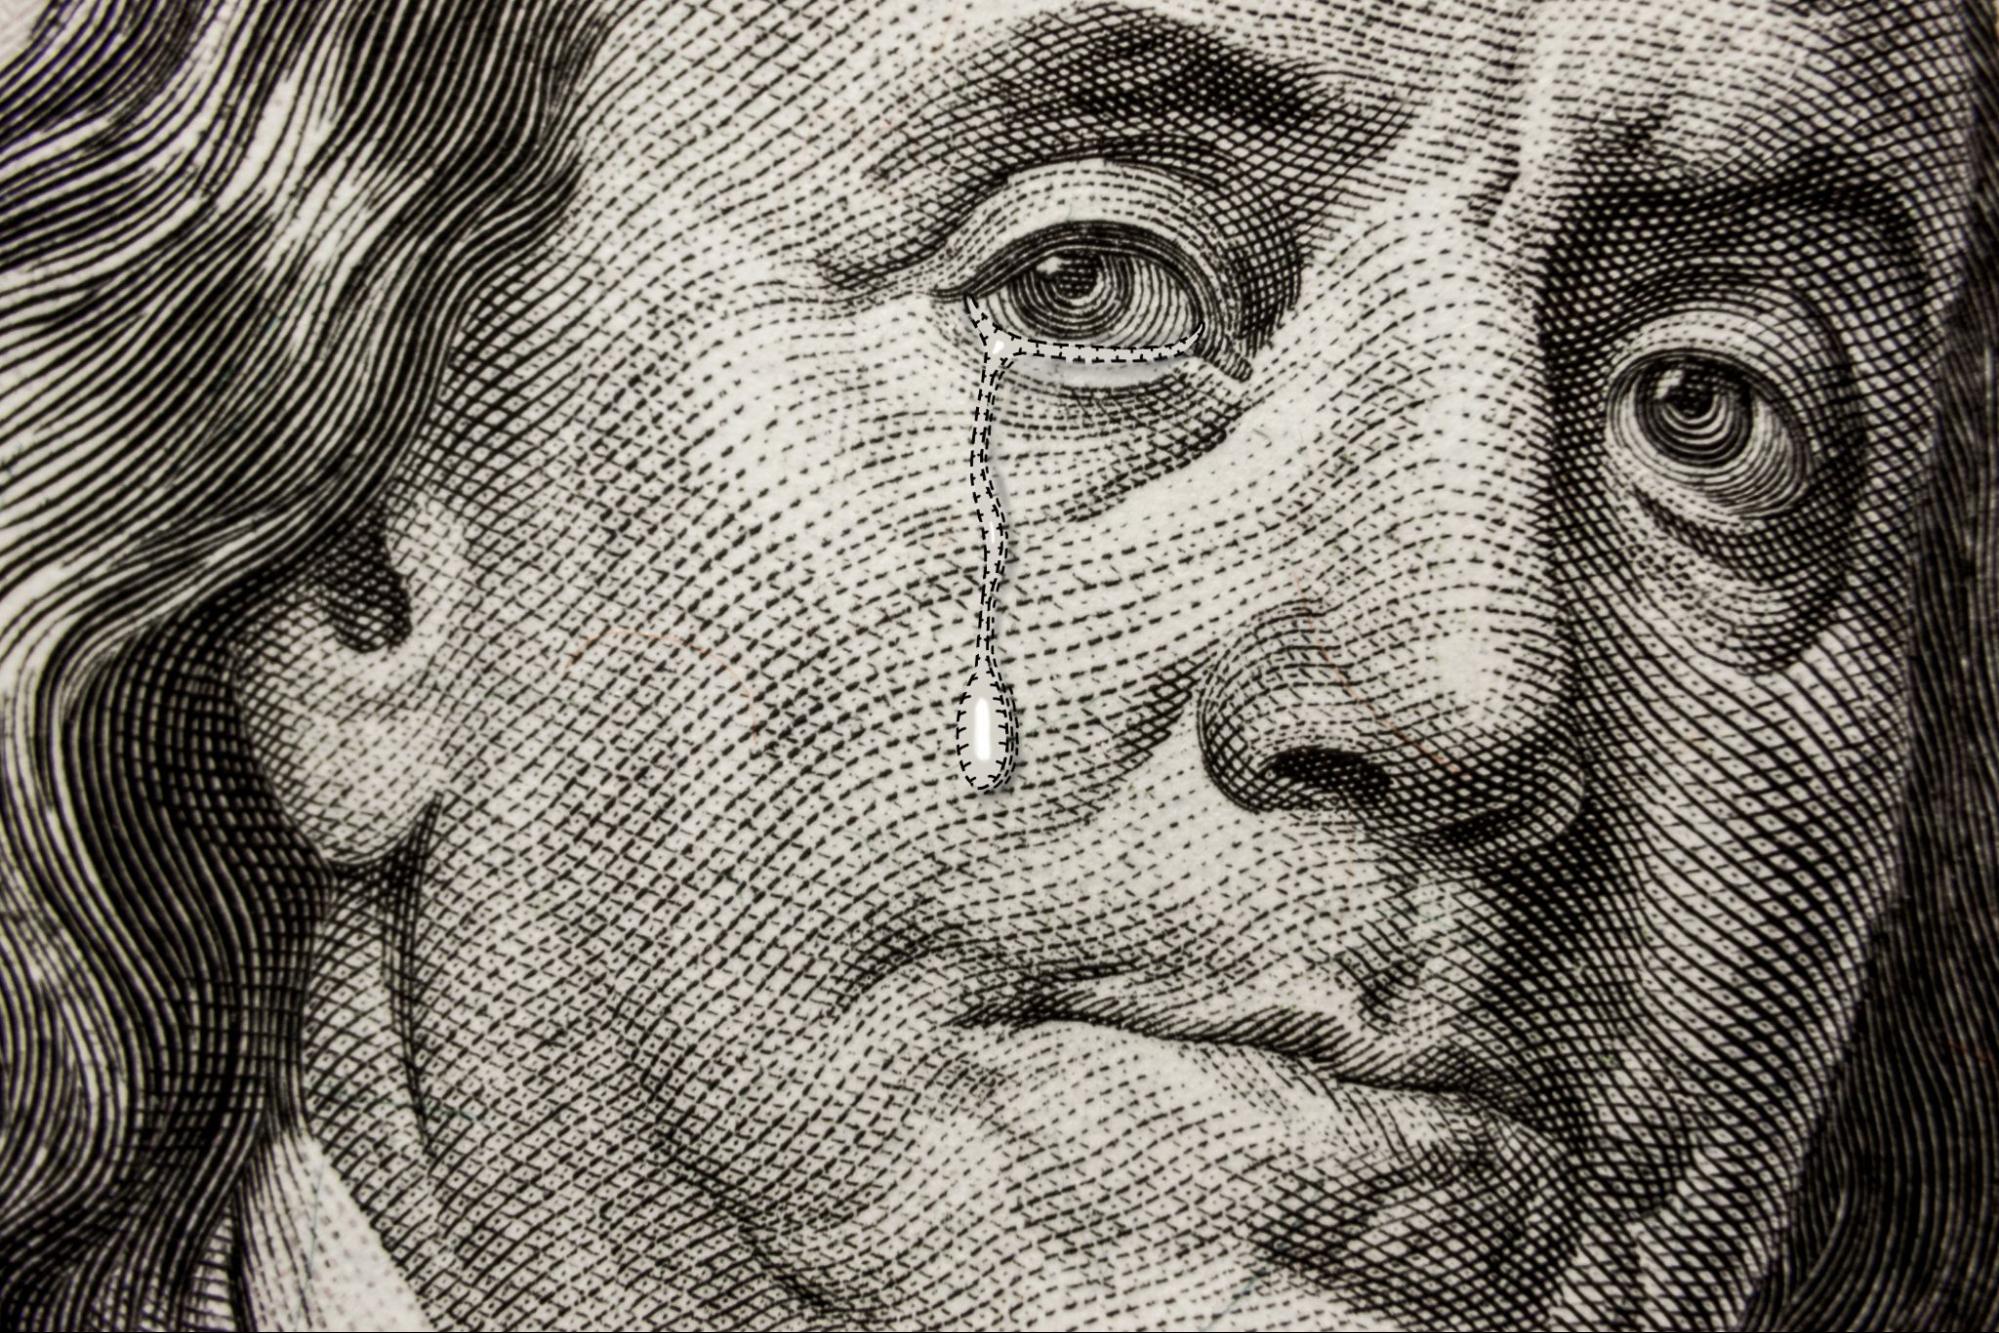 Benjamin Franklin, corruption, US Government, Capitalism